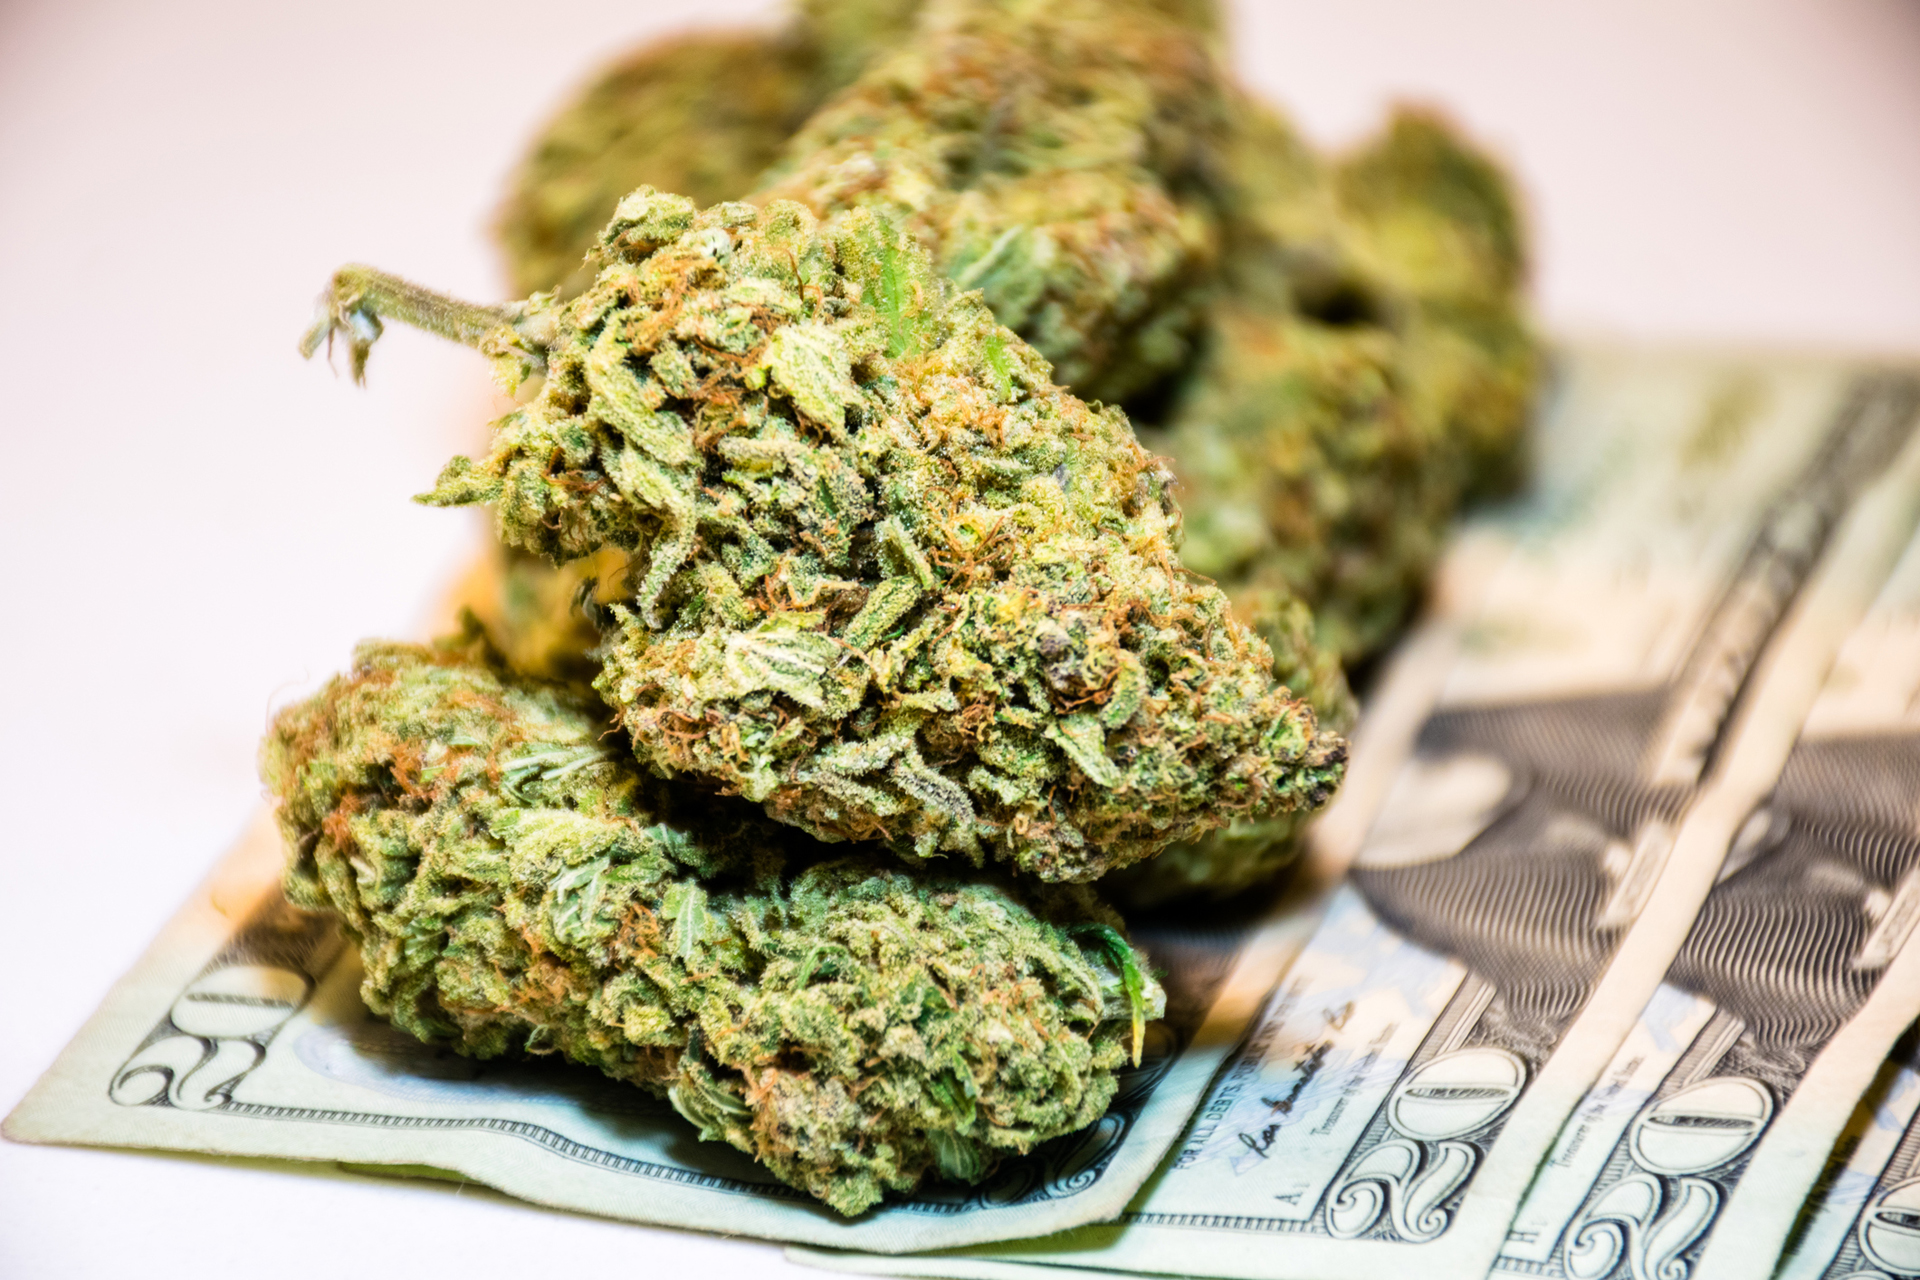 Marijuana and cash